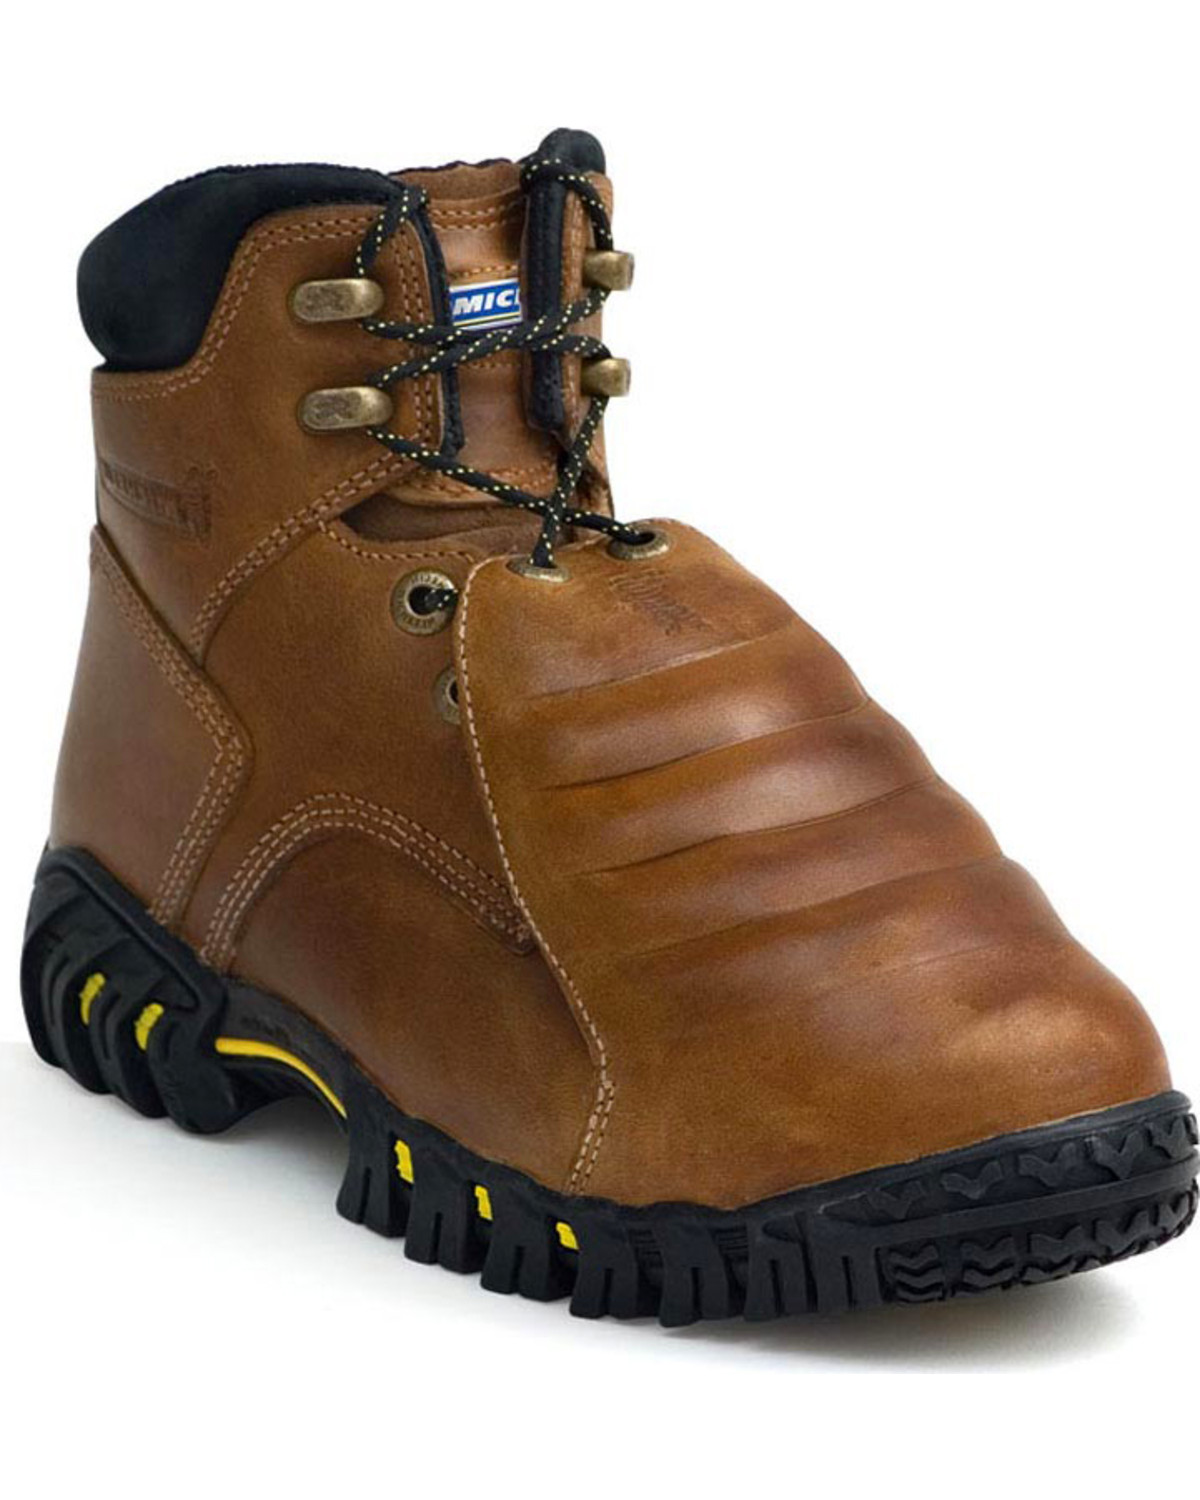 metatarsal work boots